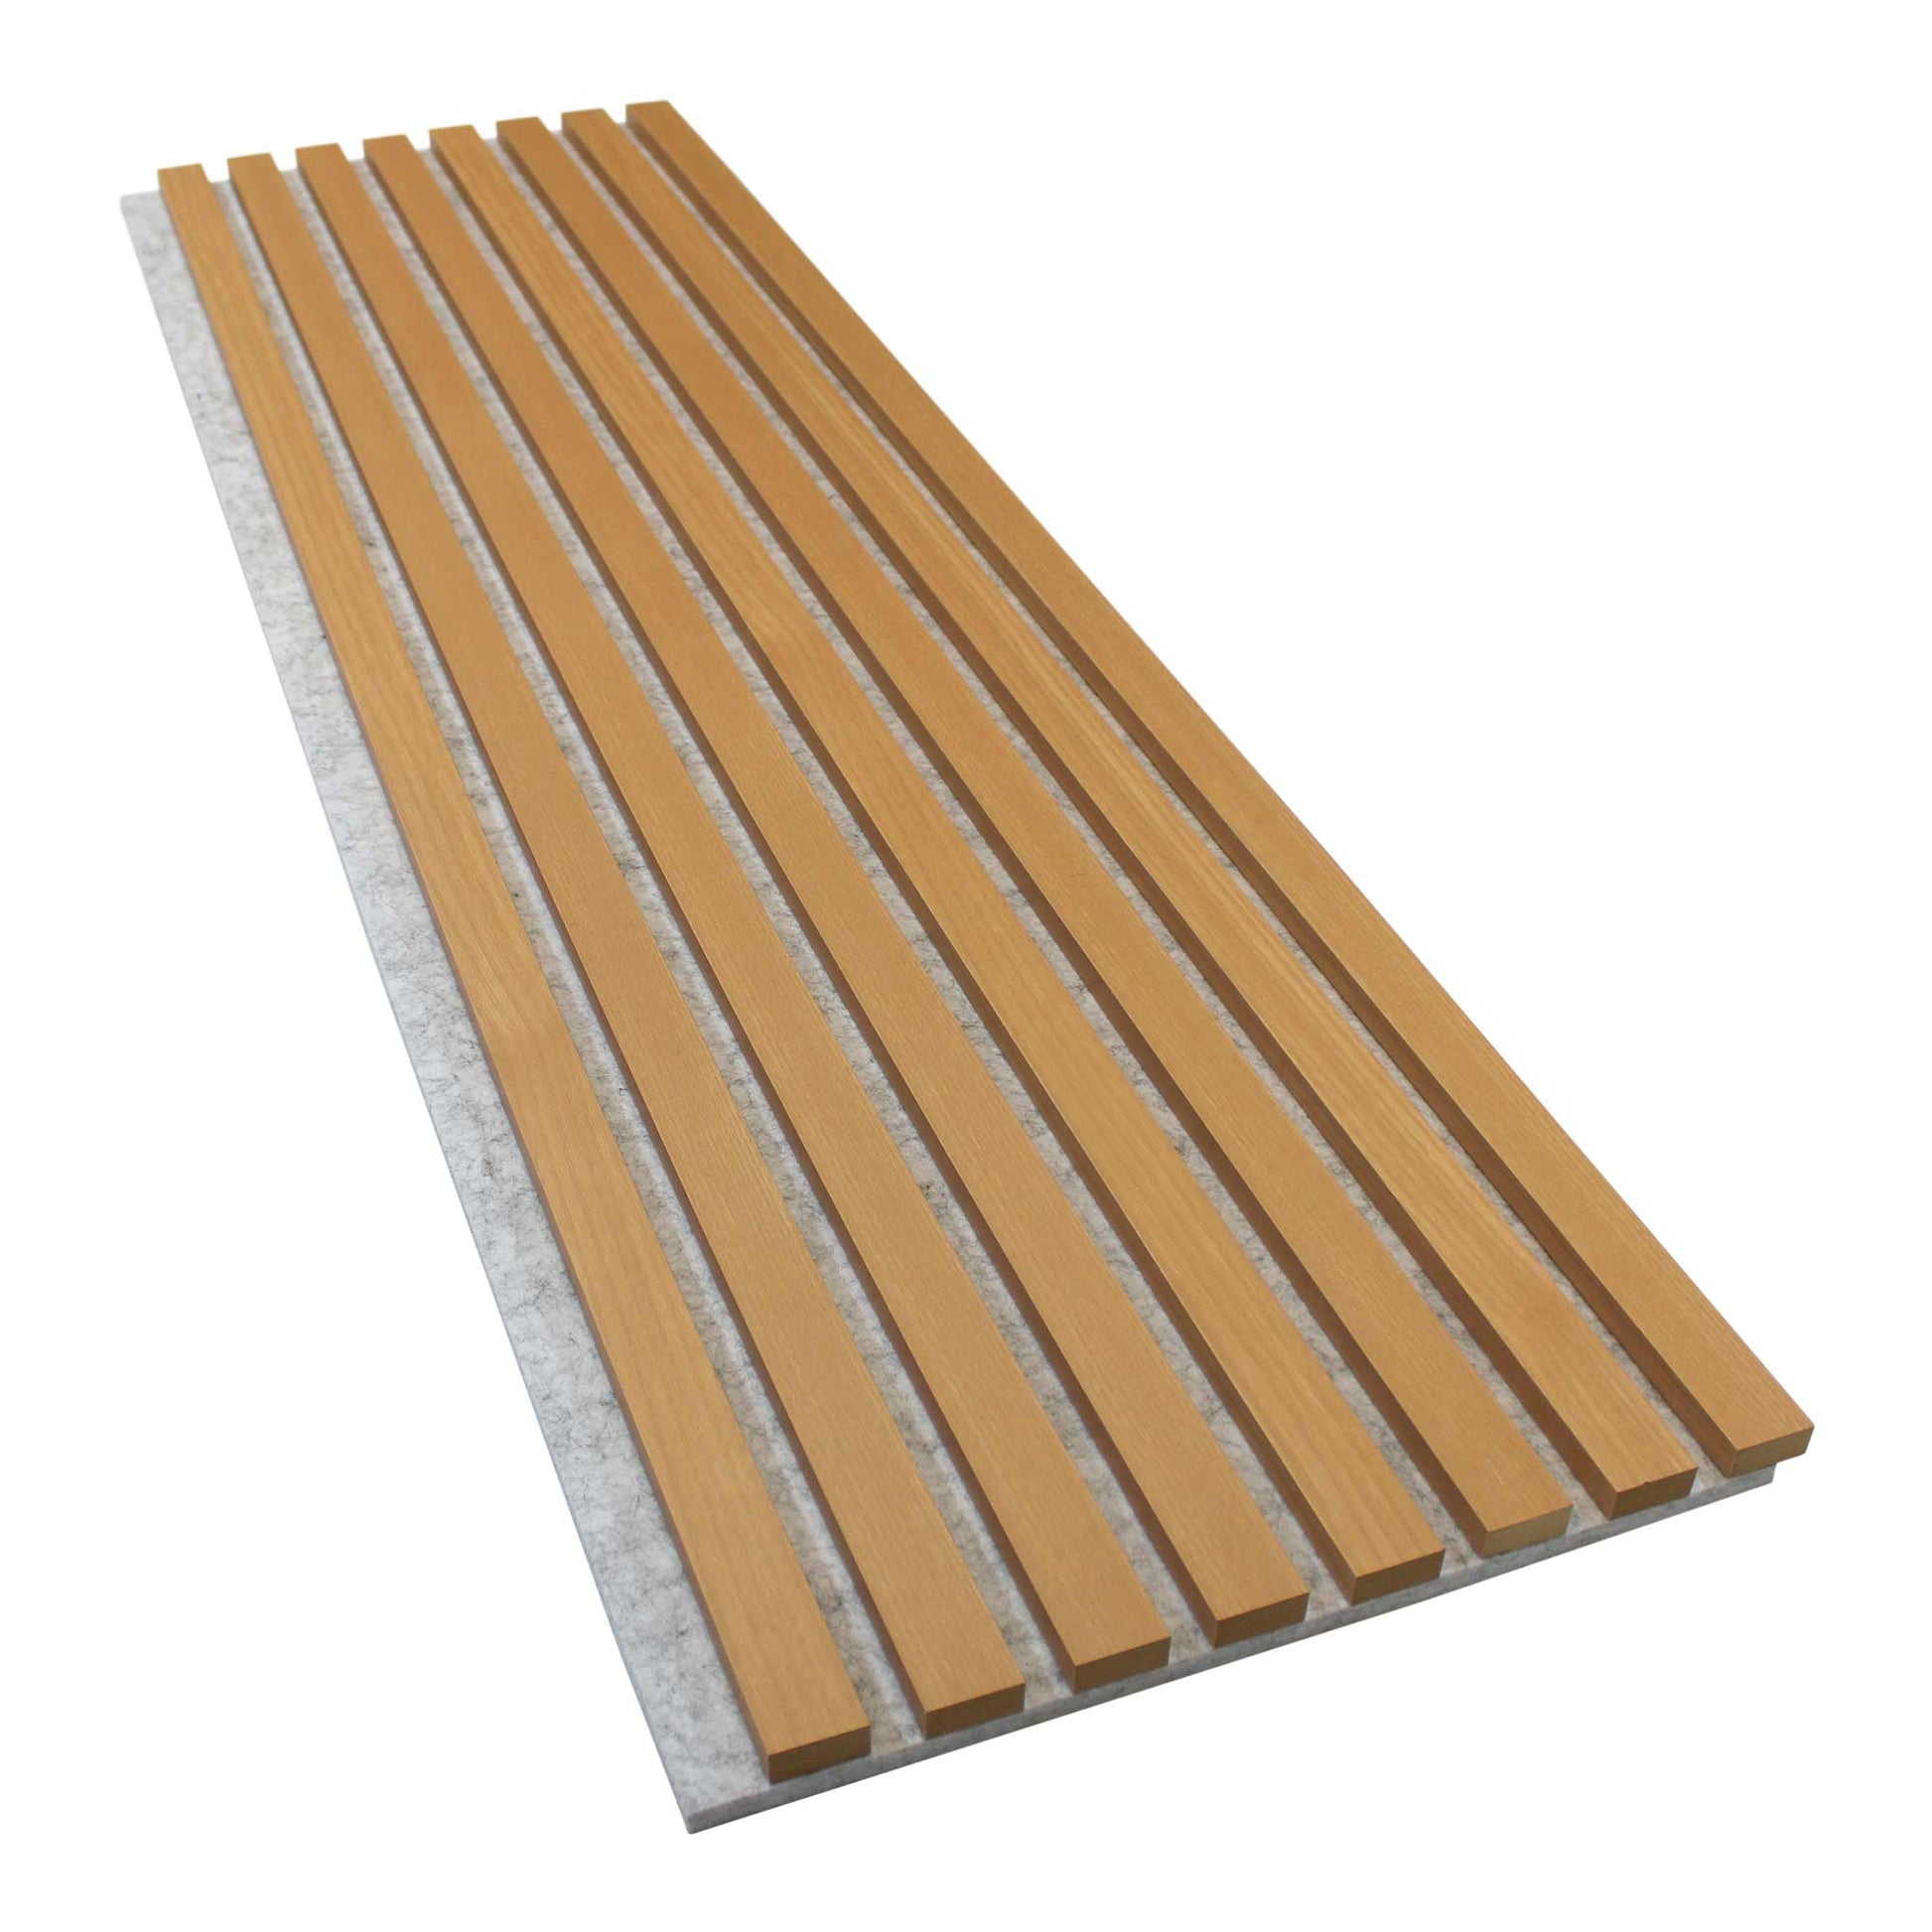 Natural Oak Acoustic Slat Wood Paneling White Felt Backing –